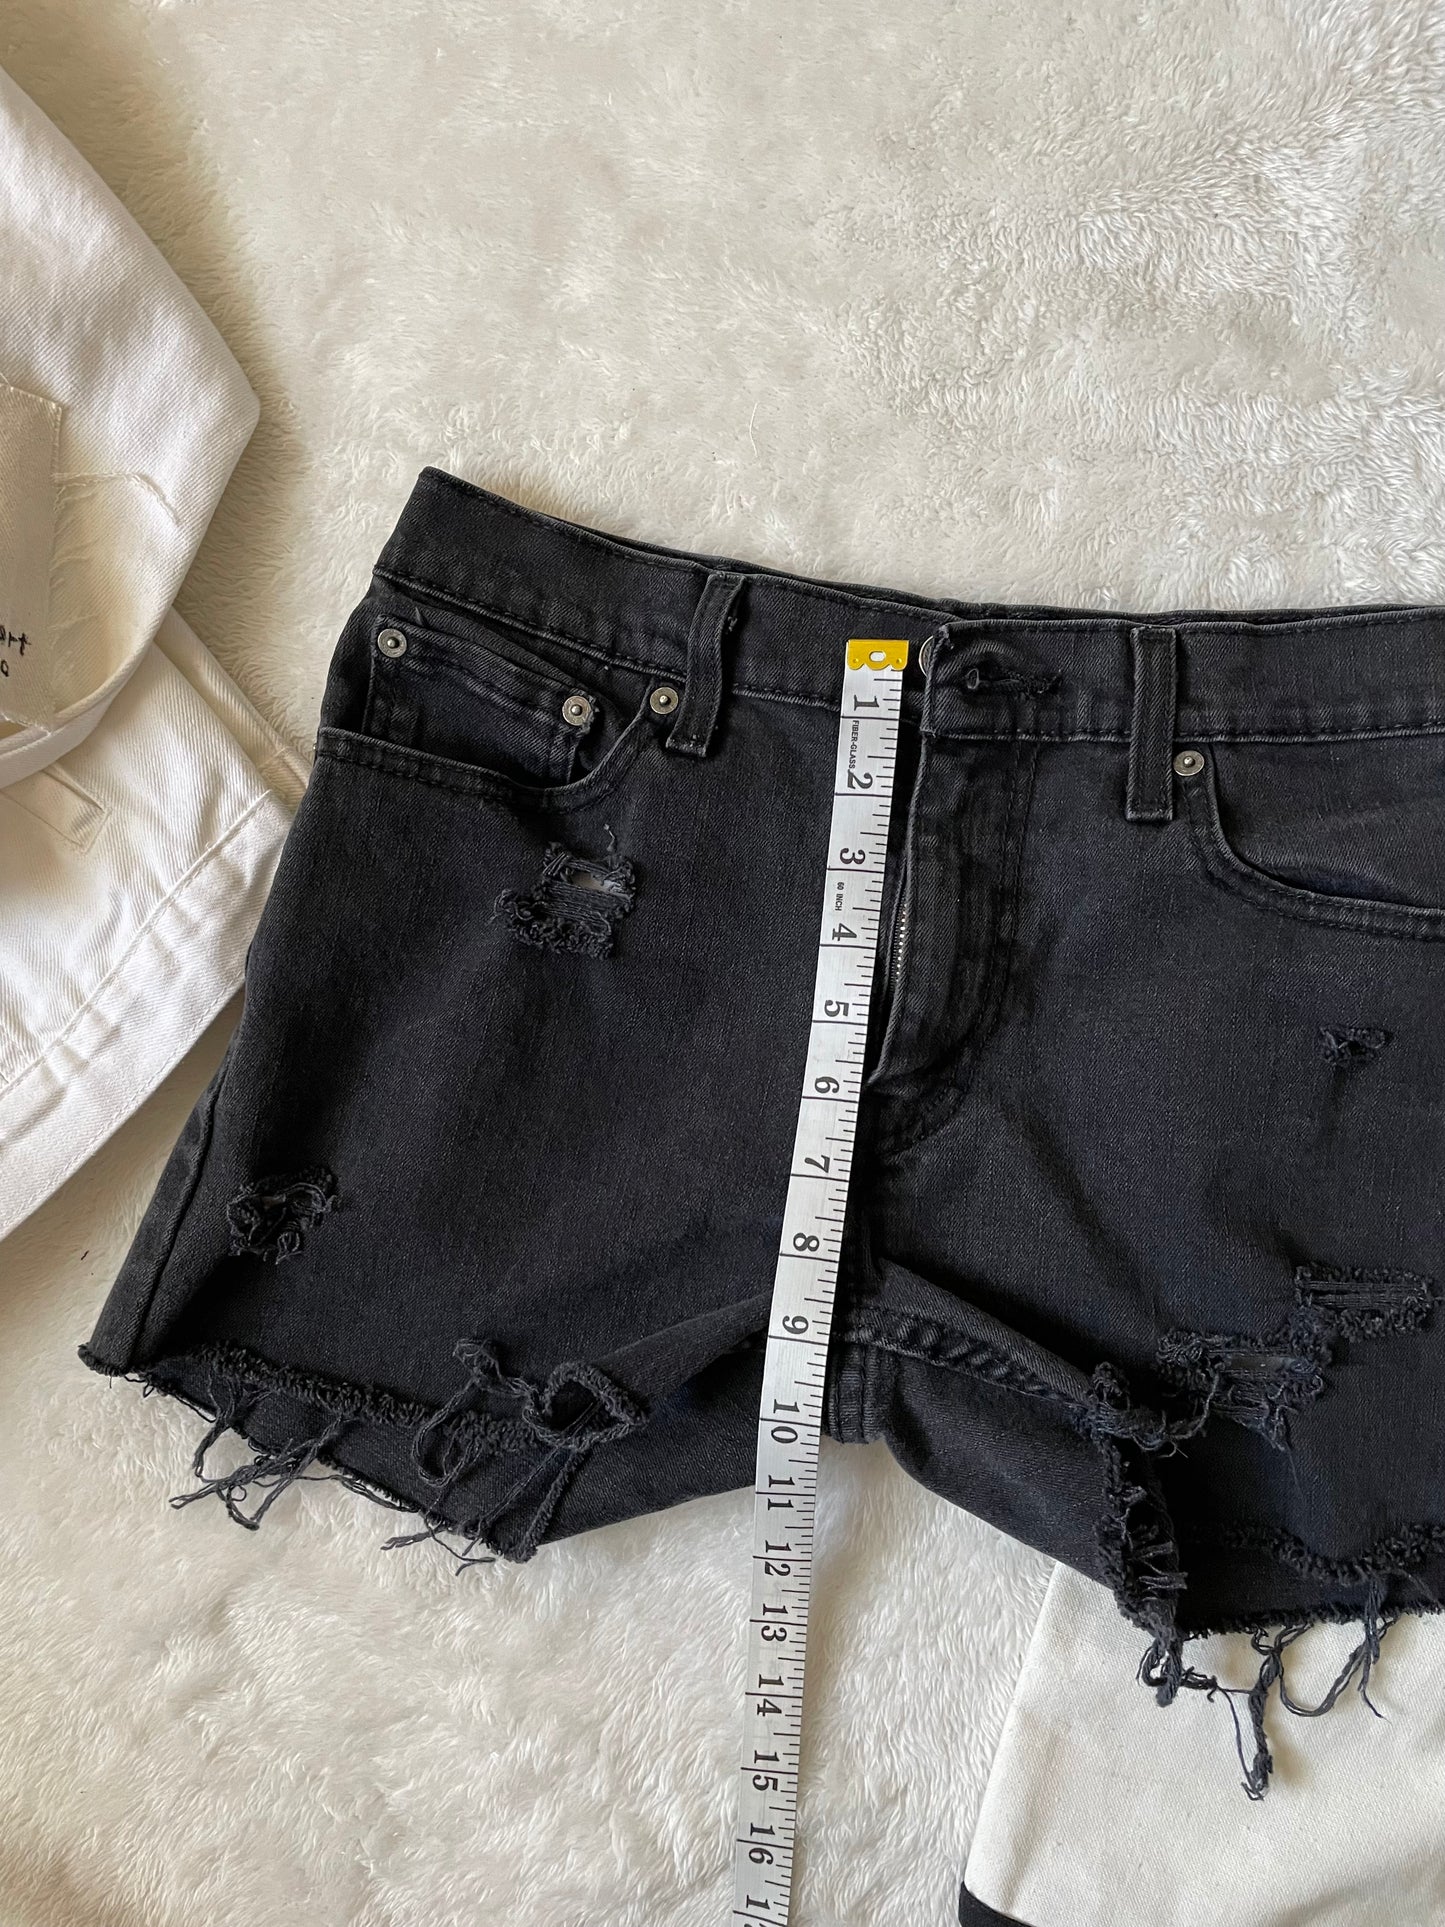 Levi’s Ashy black 3" shorts. Size 30